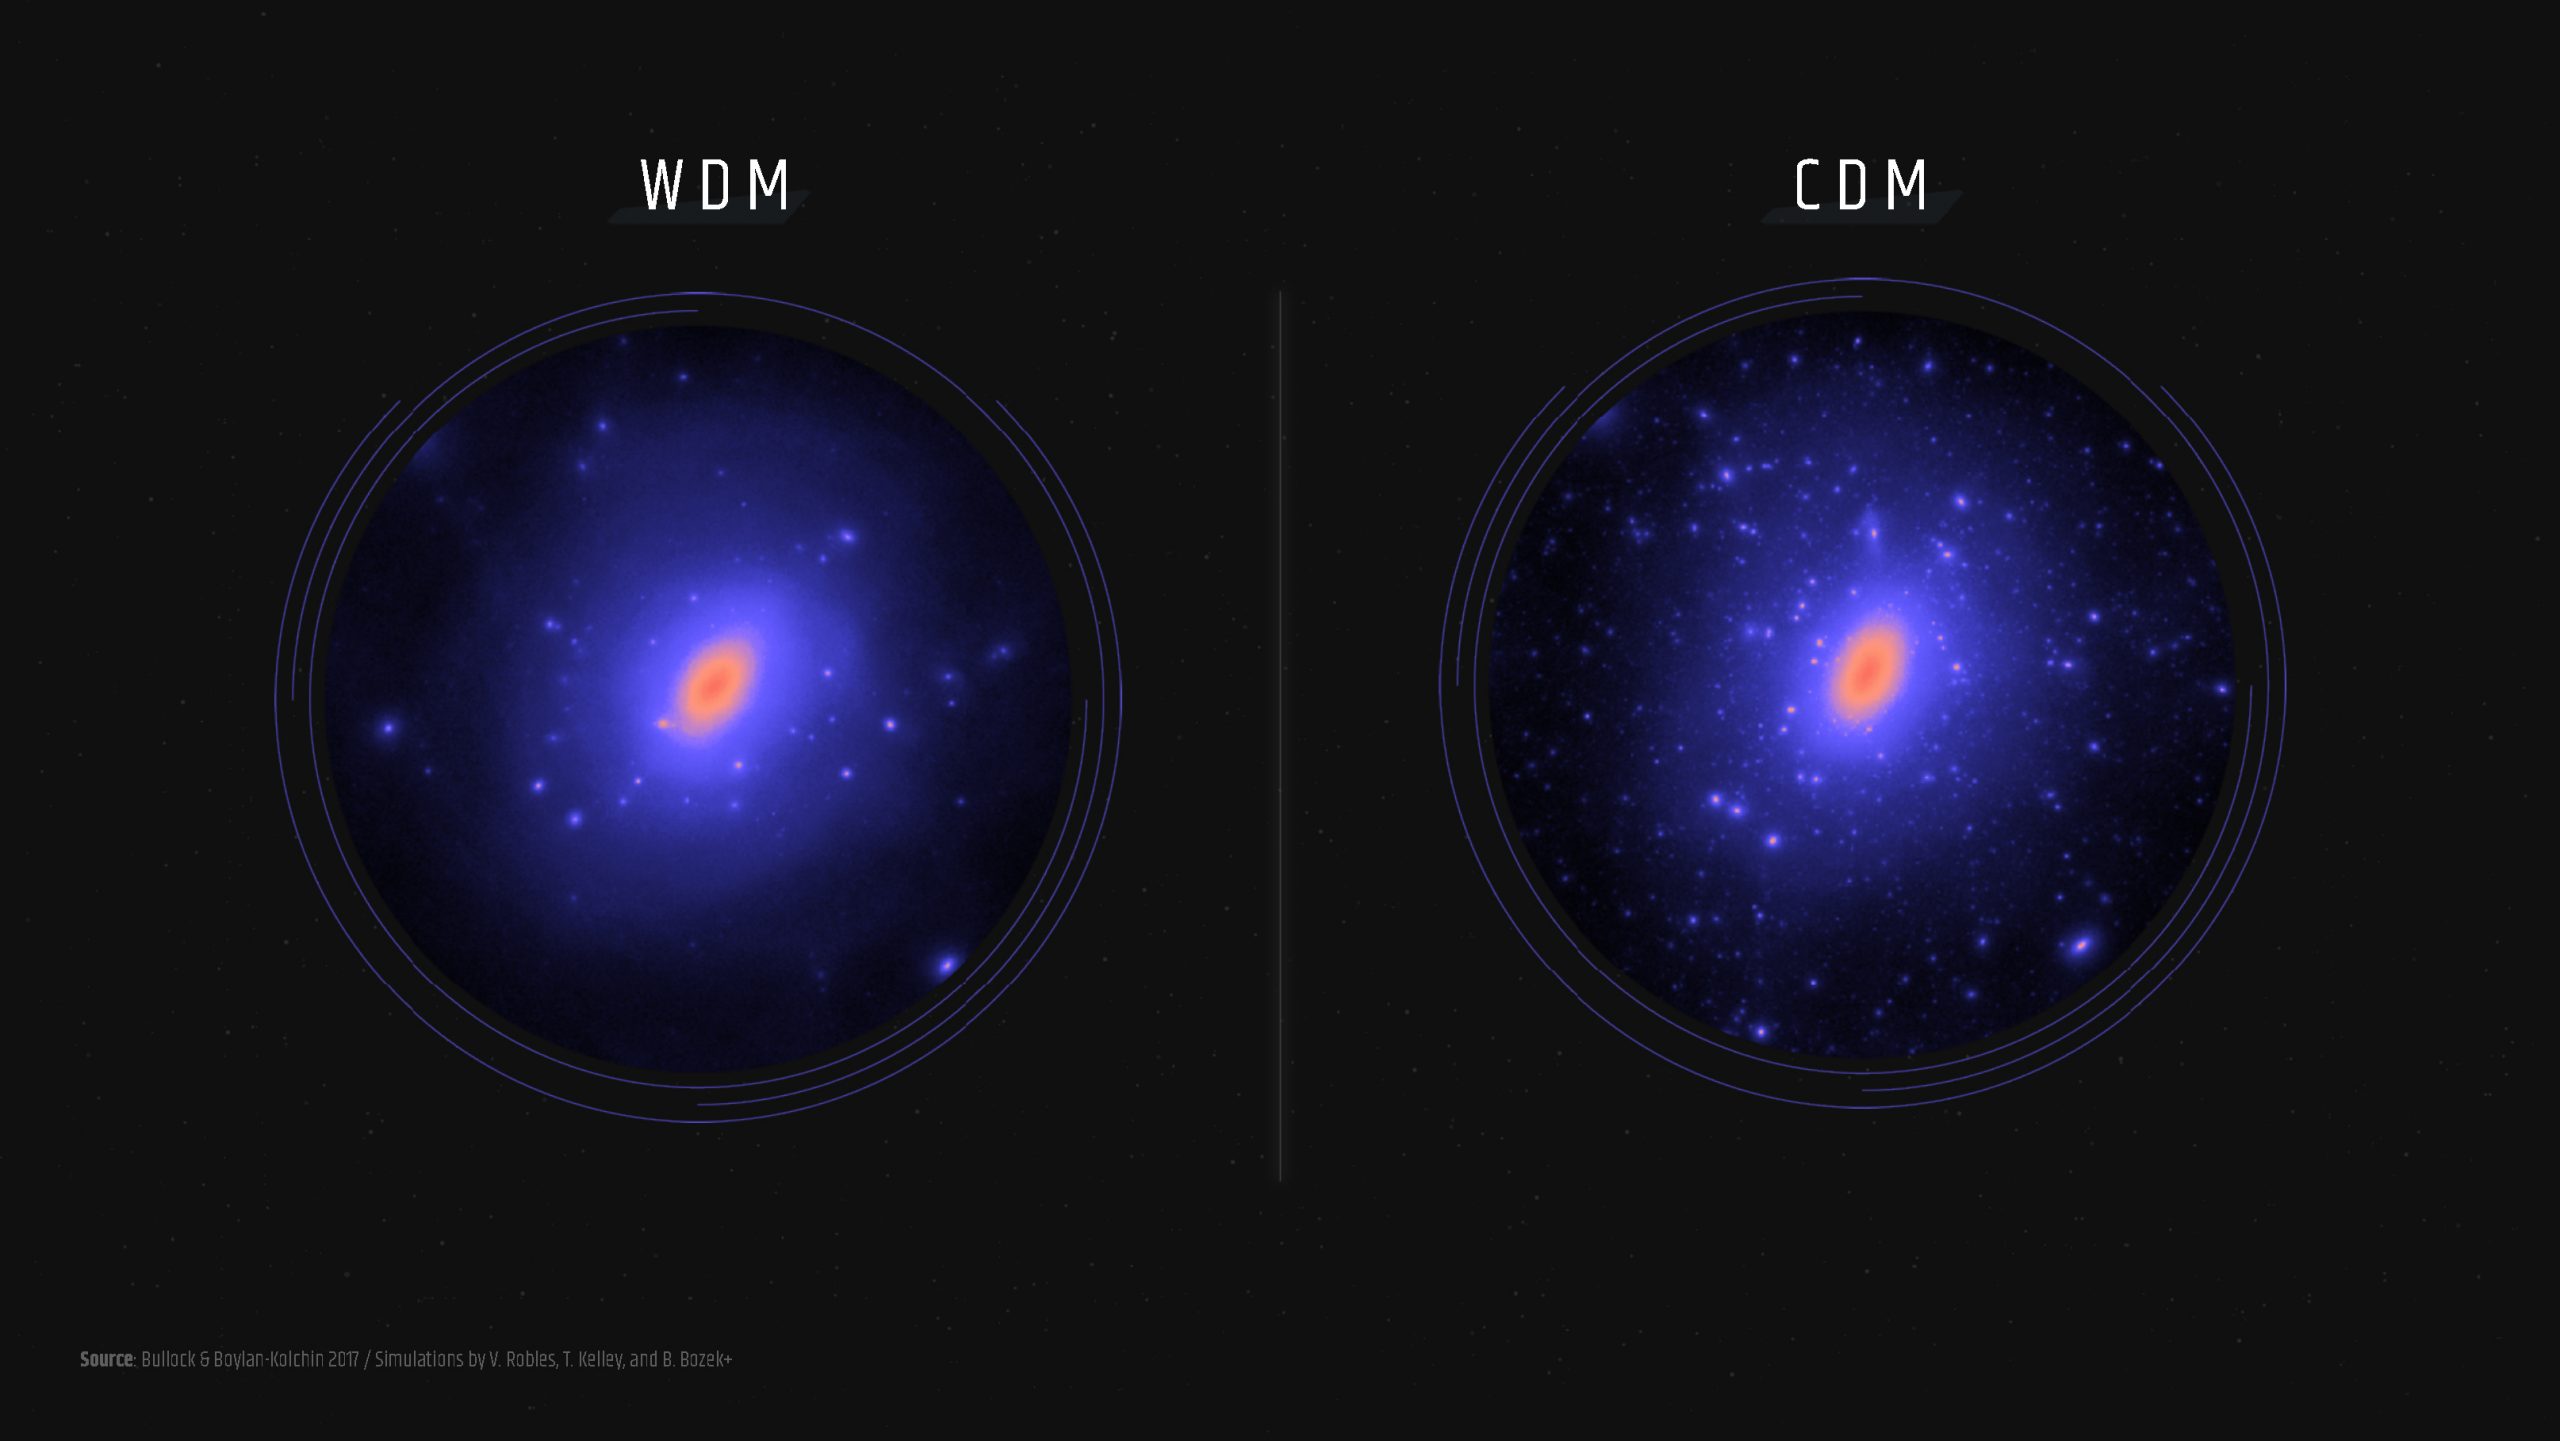 dark energy dark matter